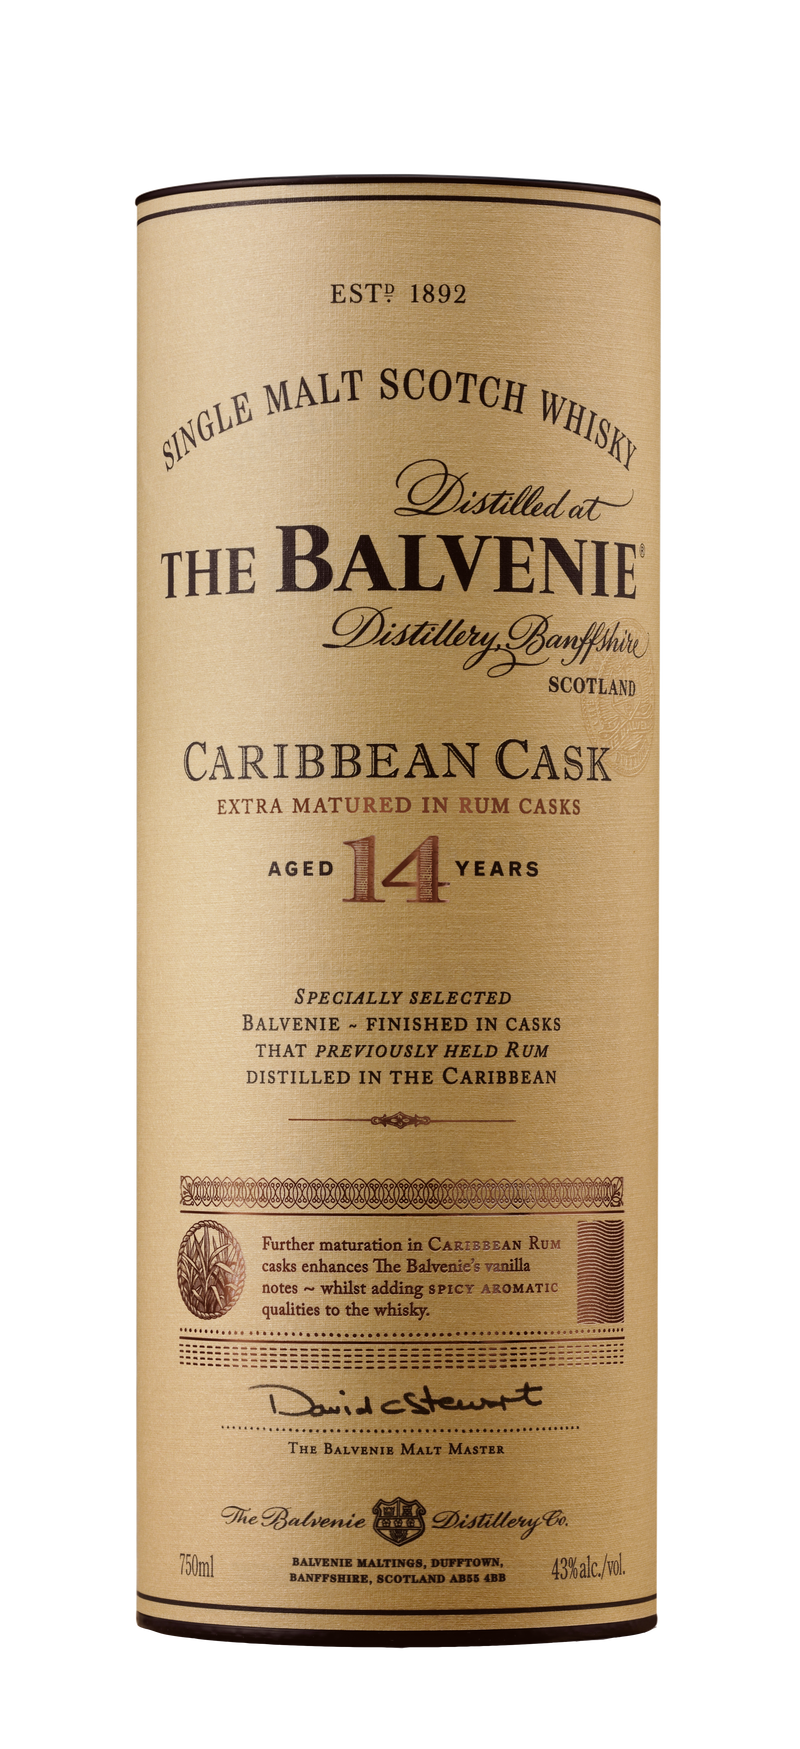 BALVENIE CARIBBEAN CASK-14 YR